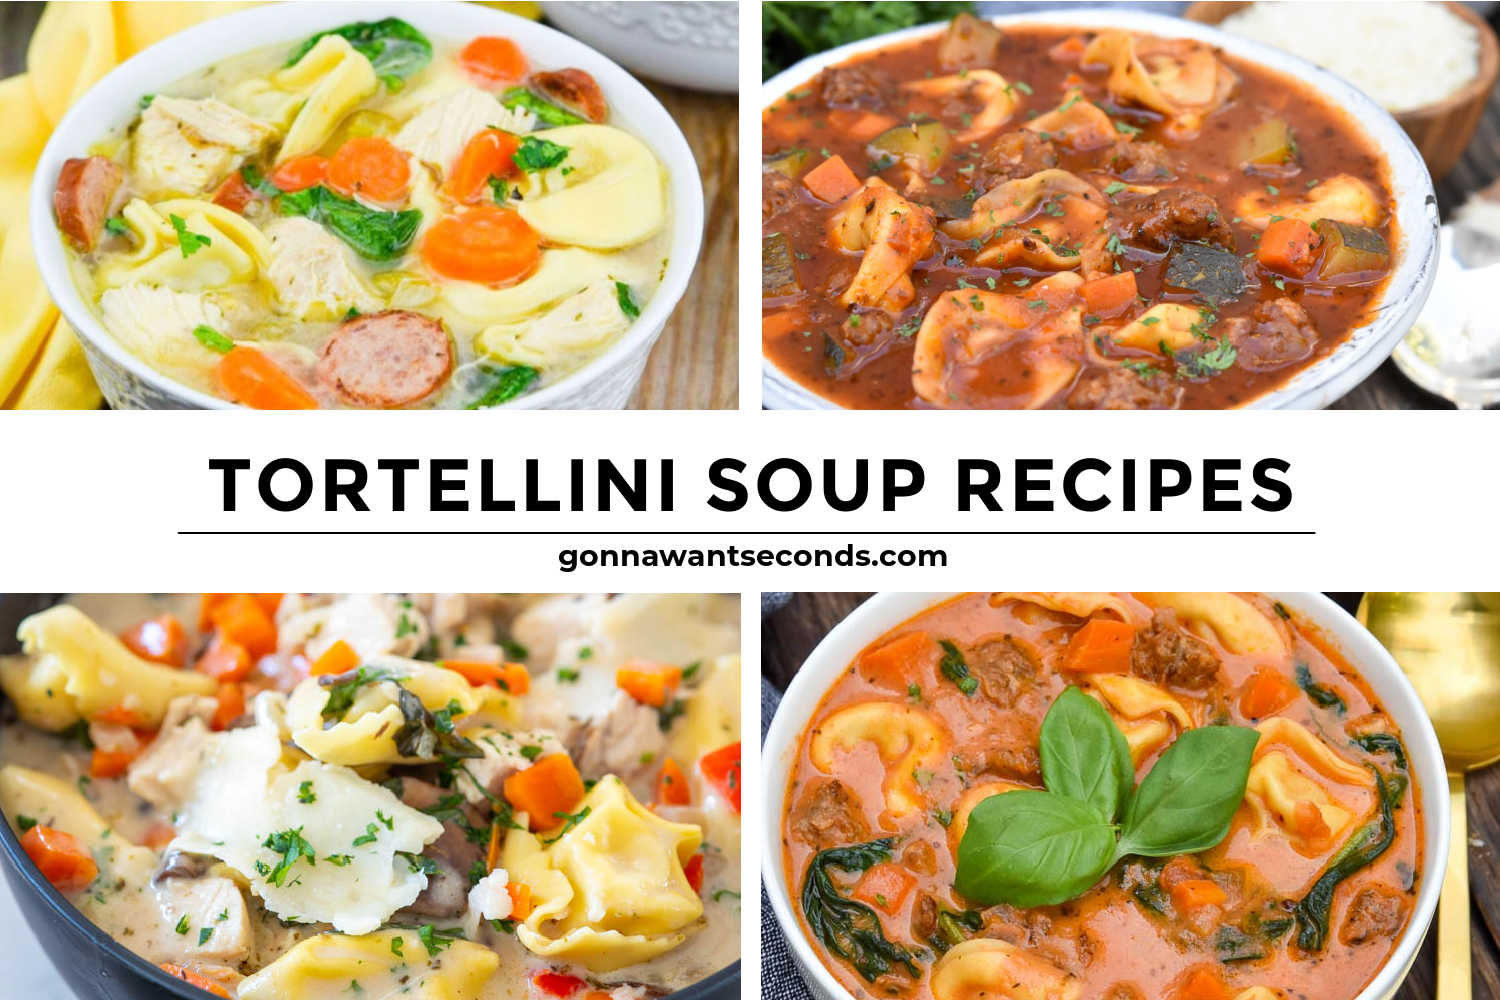 Tortellini Soup Recipes montage